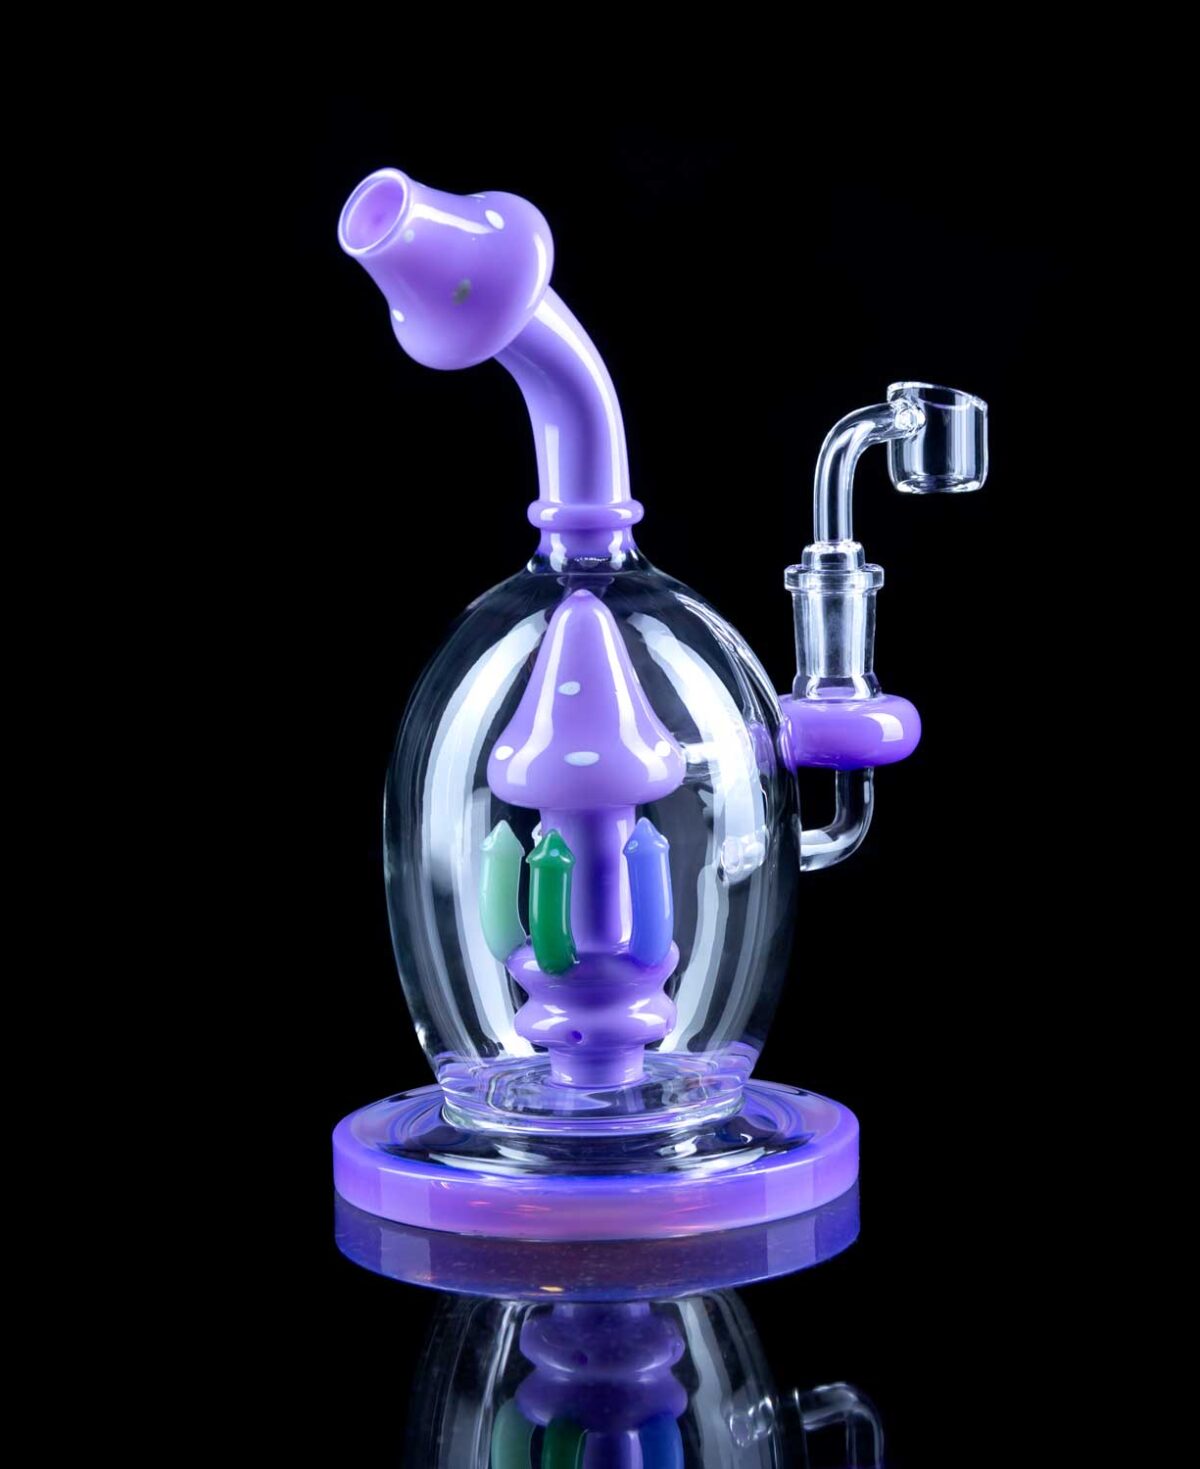 purple rig with glass mushroom detailing